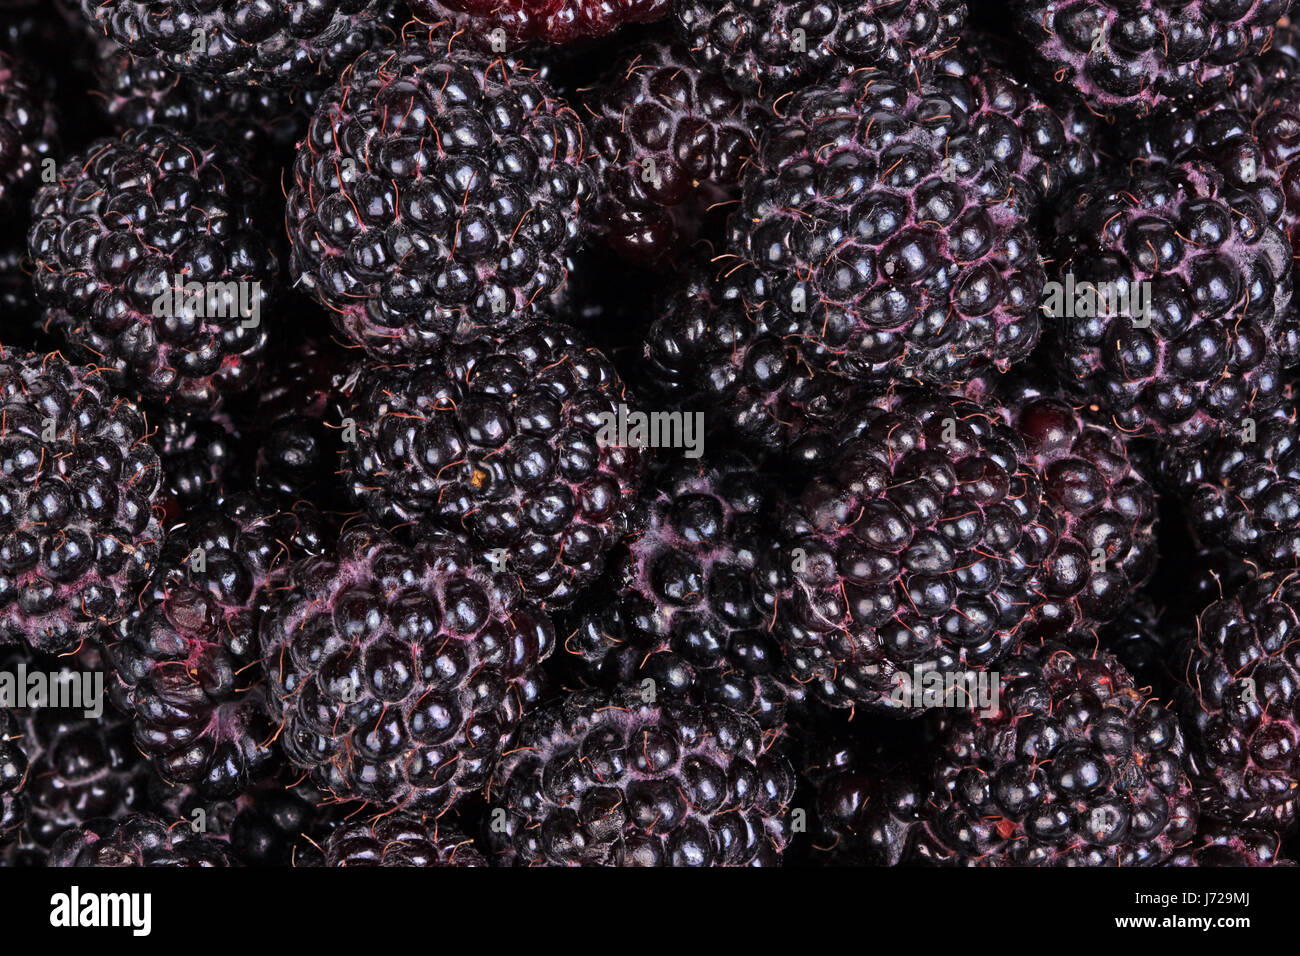 Numerous ripe, dark purple fruit of black raspberries (Rubus occidentalis) fill the frame Stock Photo